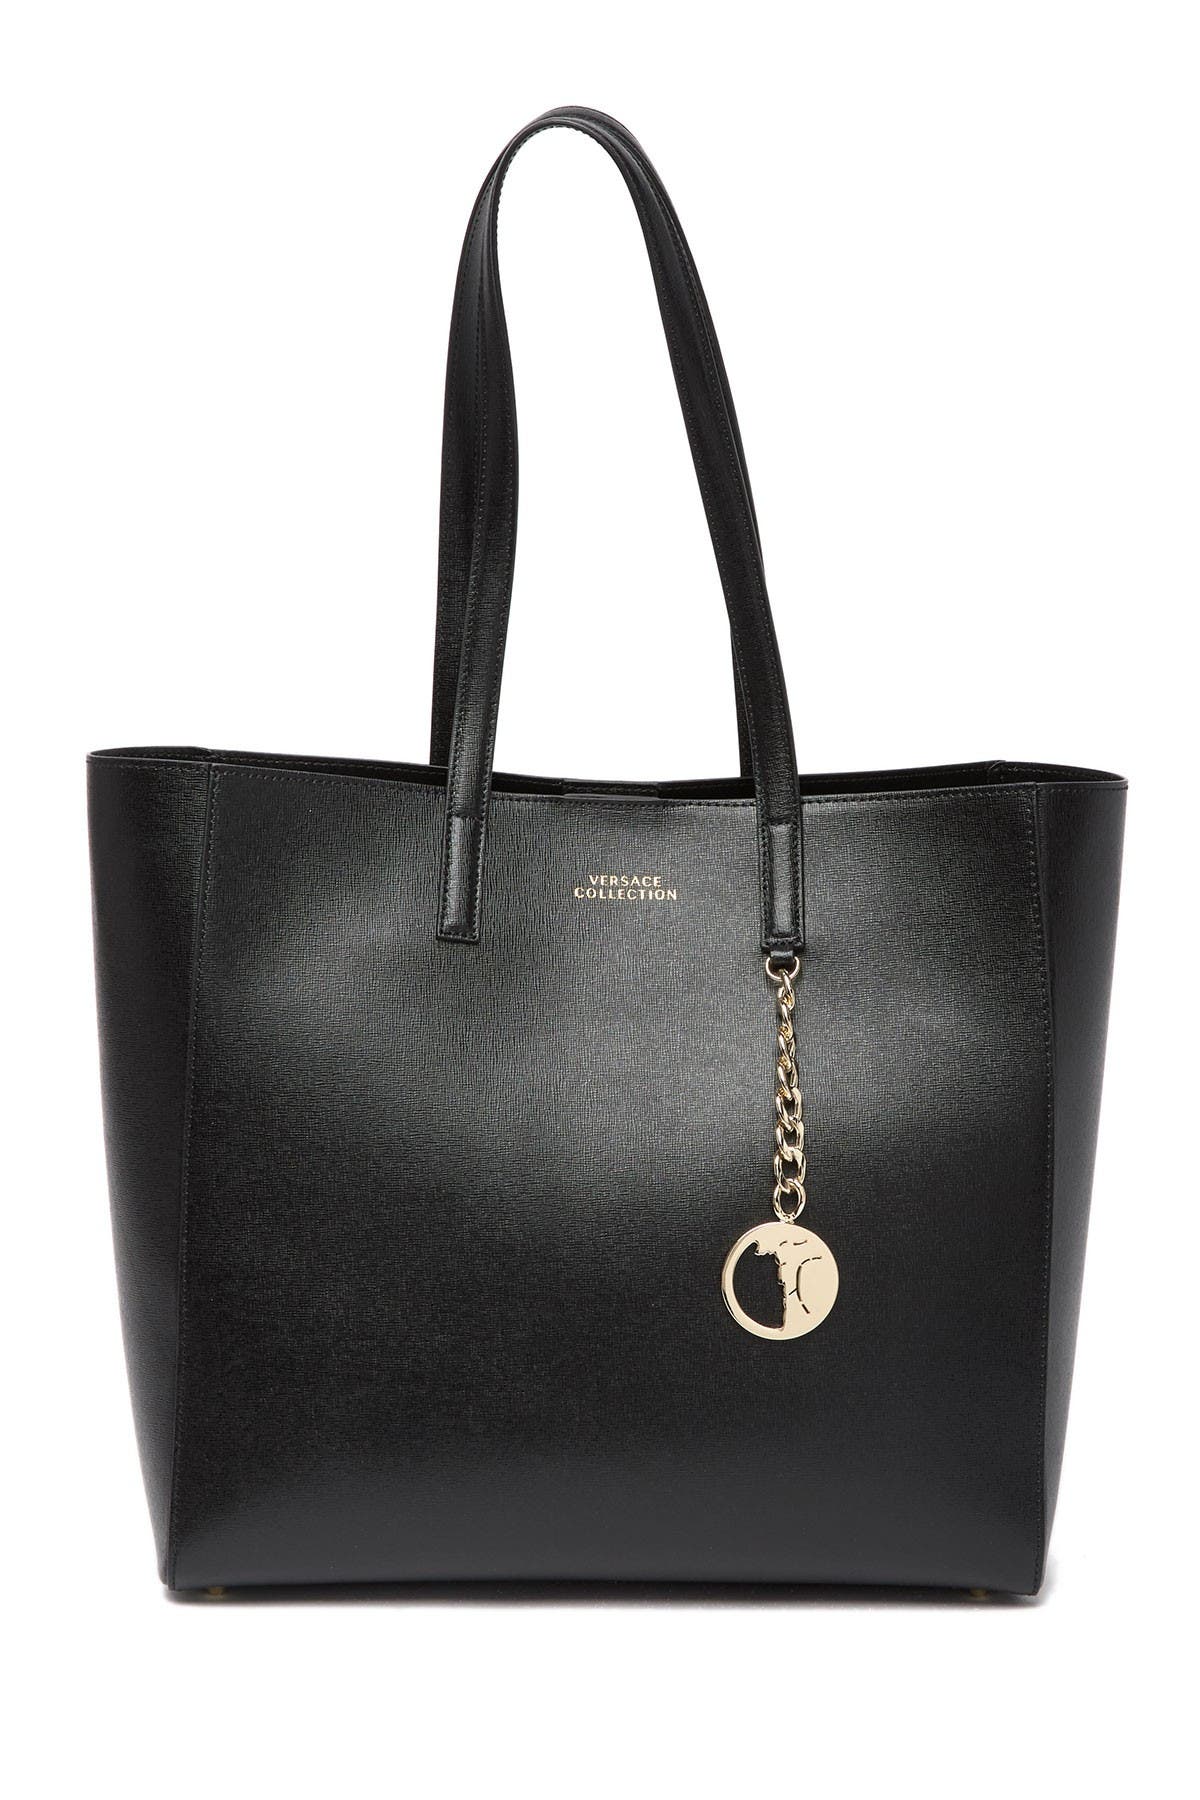 Versace | Saffiano Leather Tote Bag 